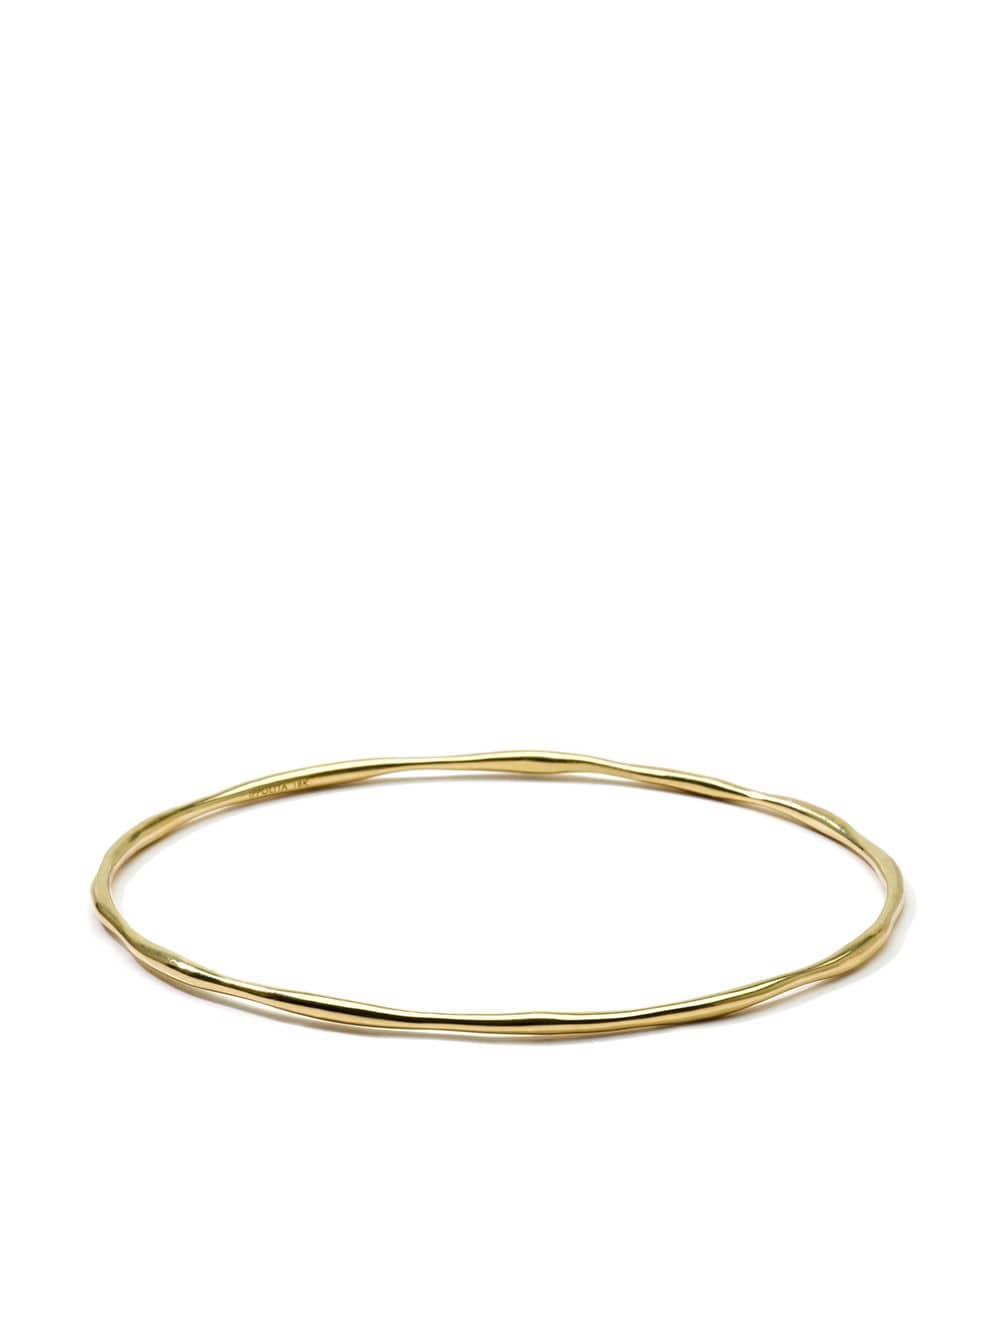 18kt yellow gold Squiggle bangle bracelet